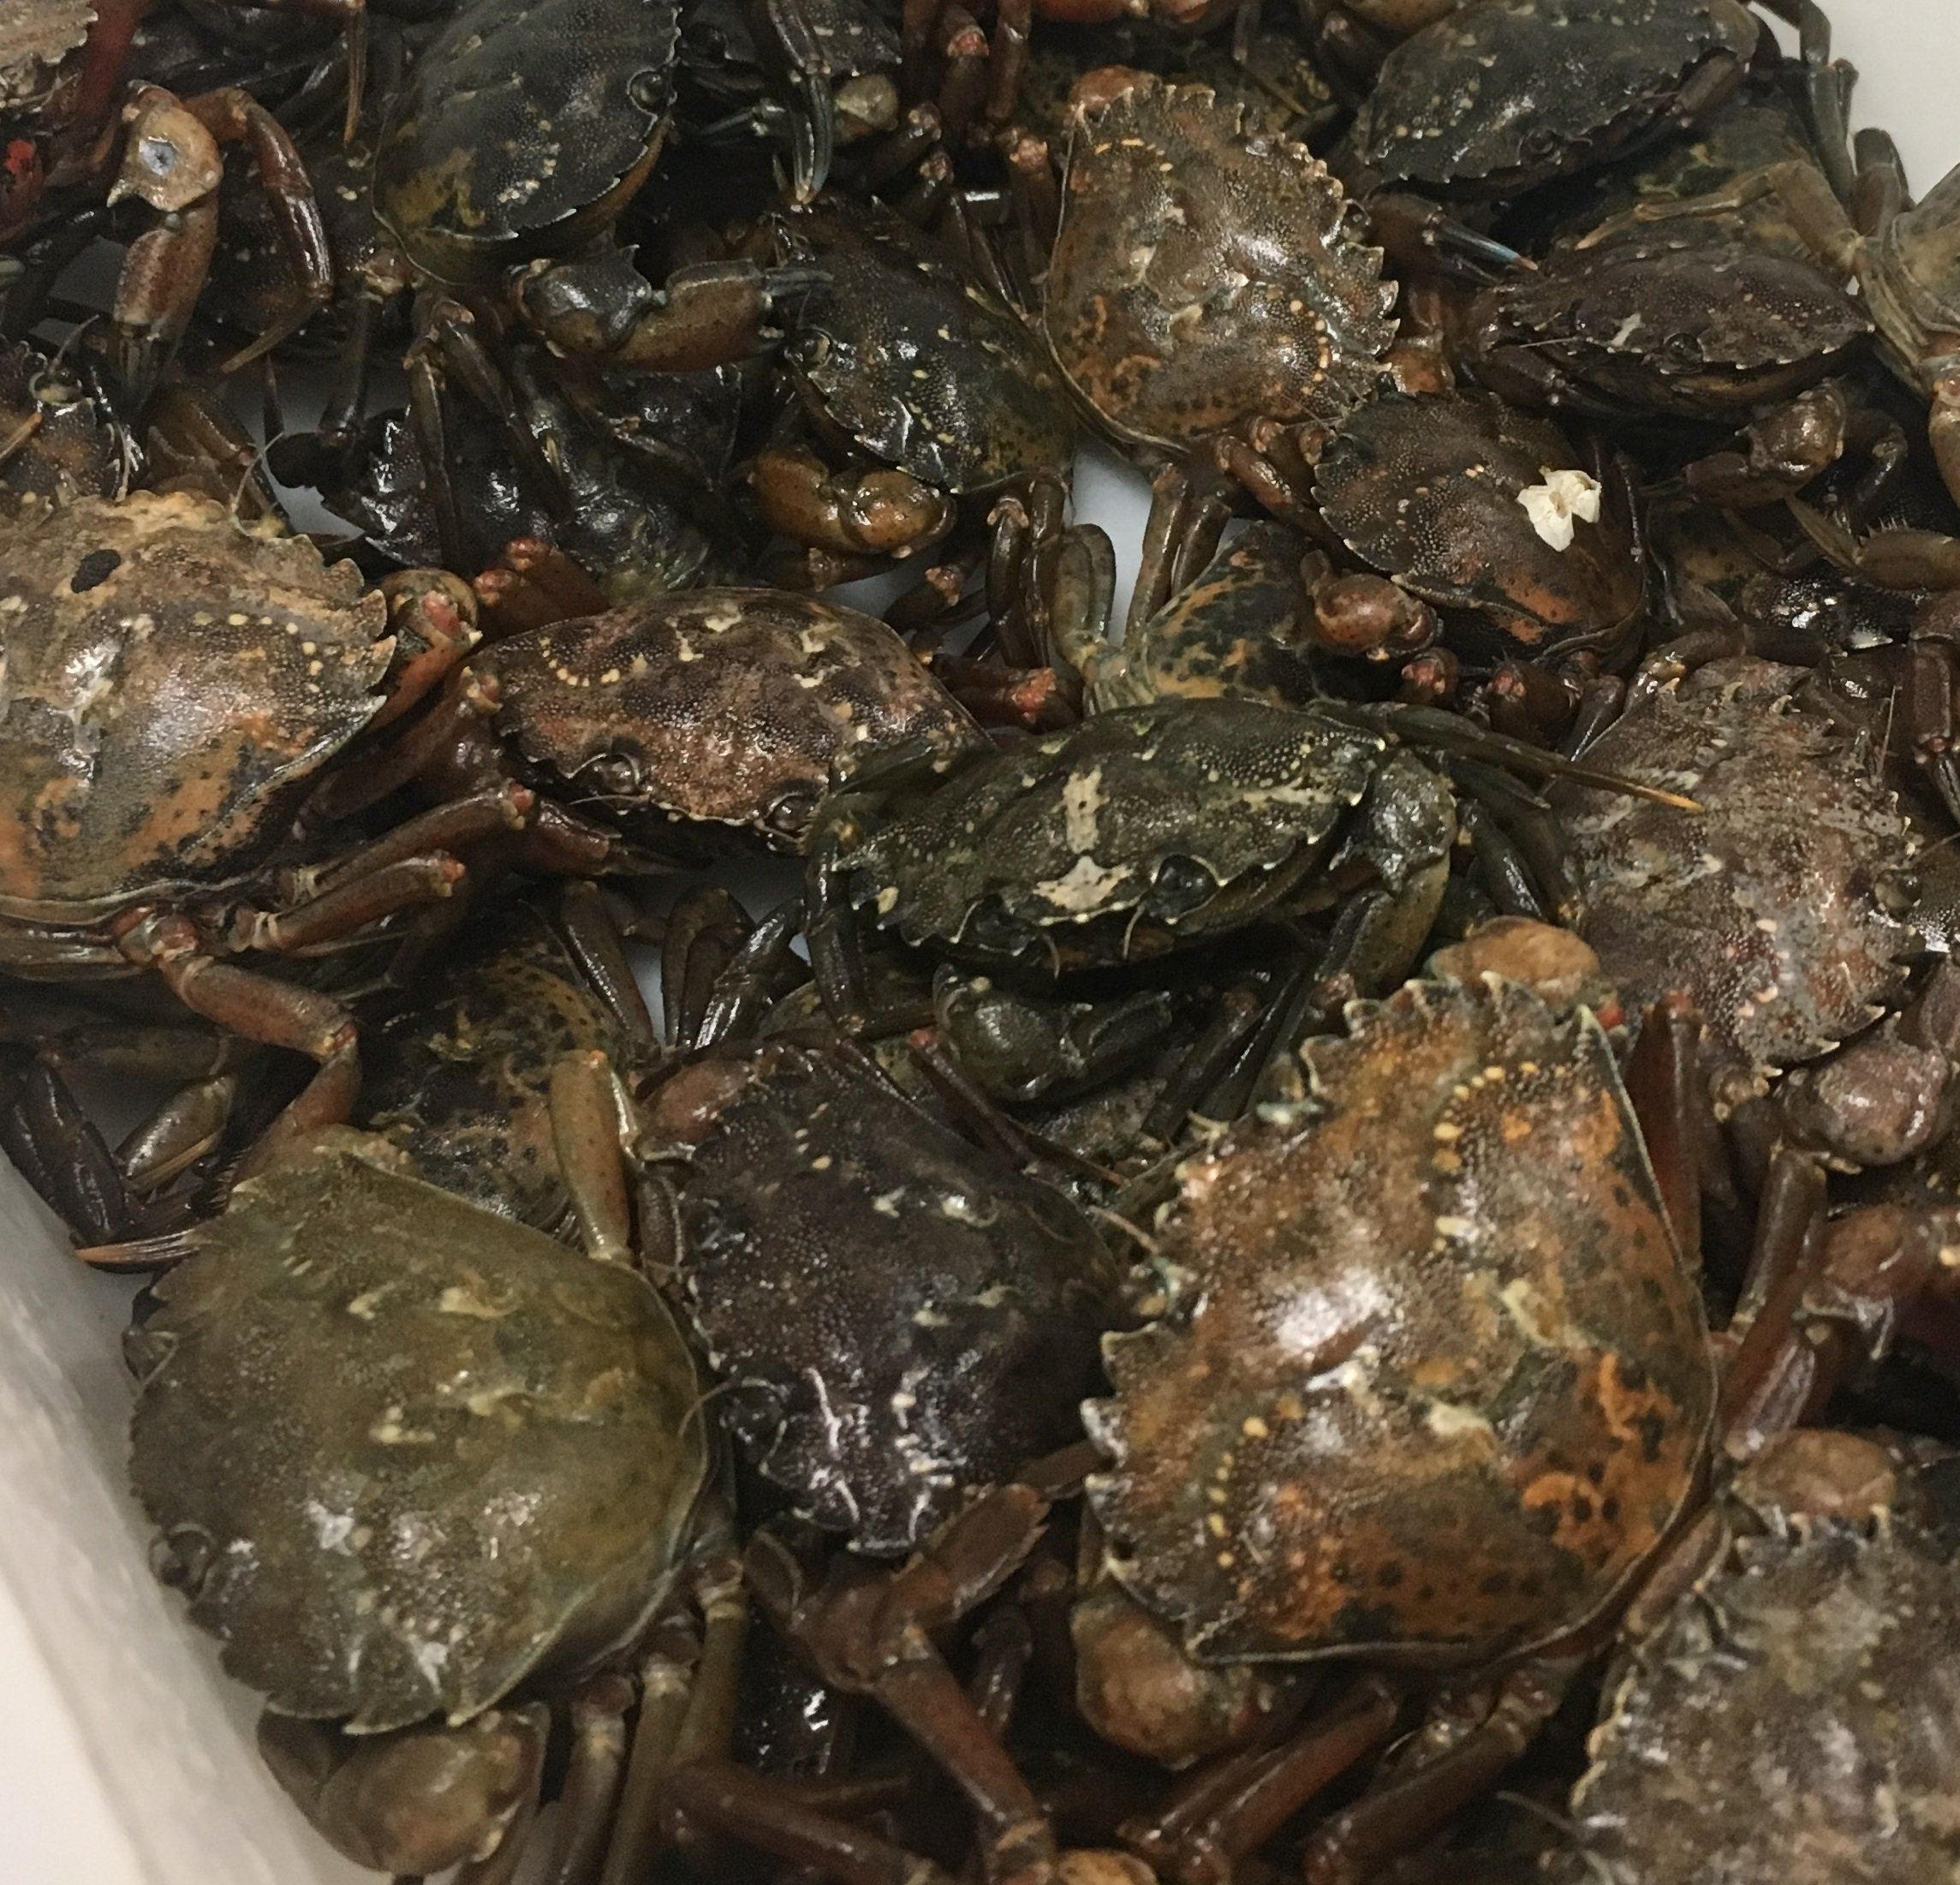 Green Crabs